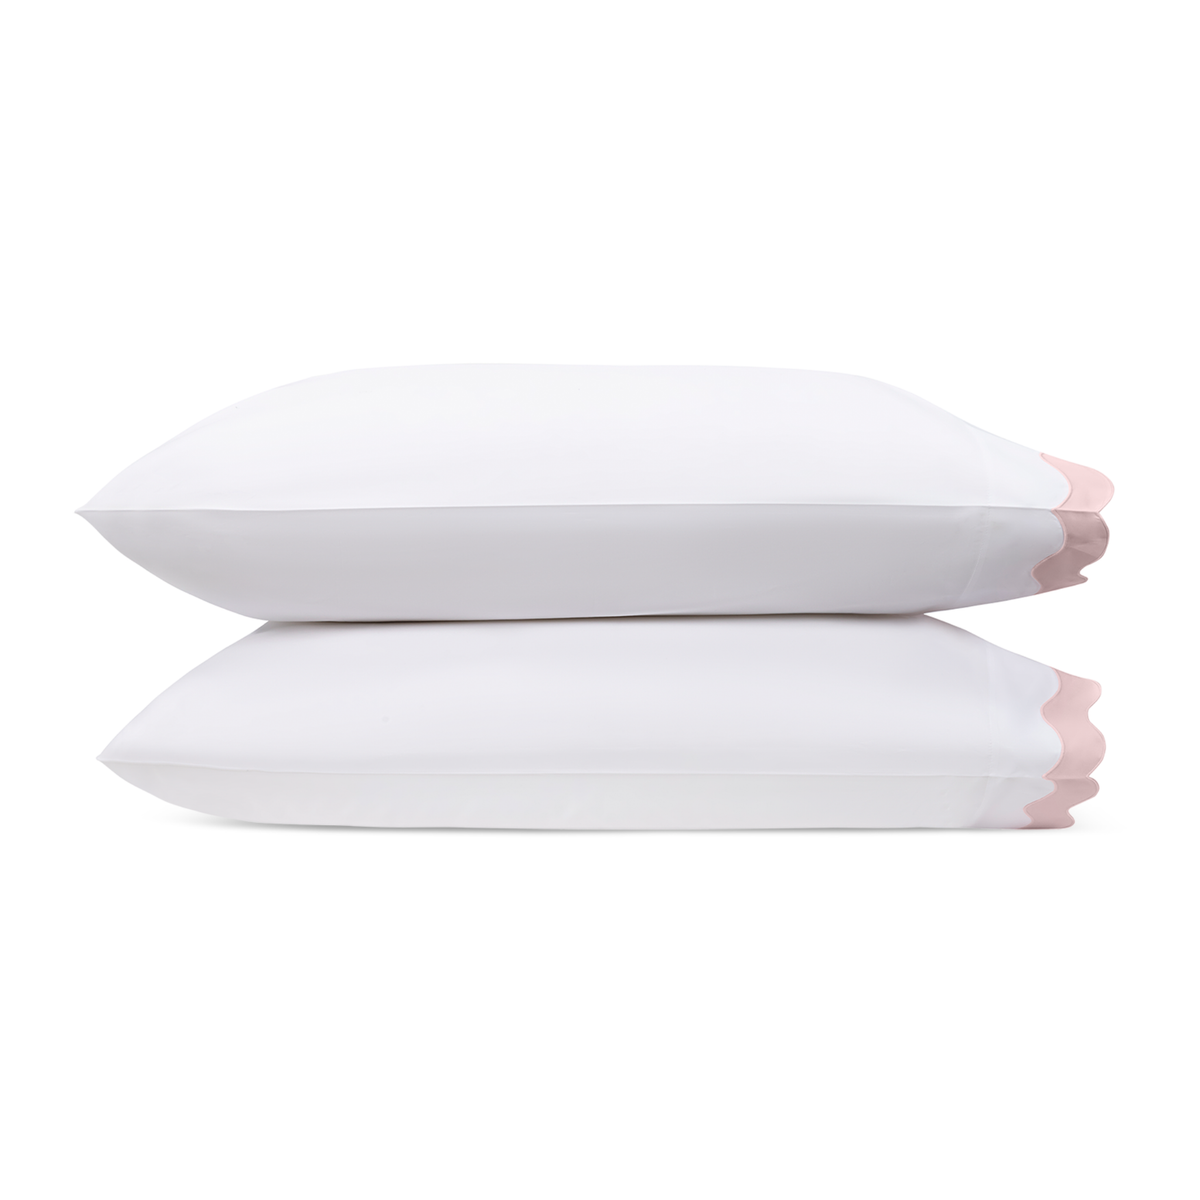 Pair of Pillowcases of Matouk Lorelei Bedding in Pink Color